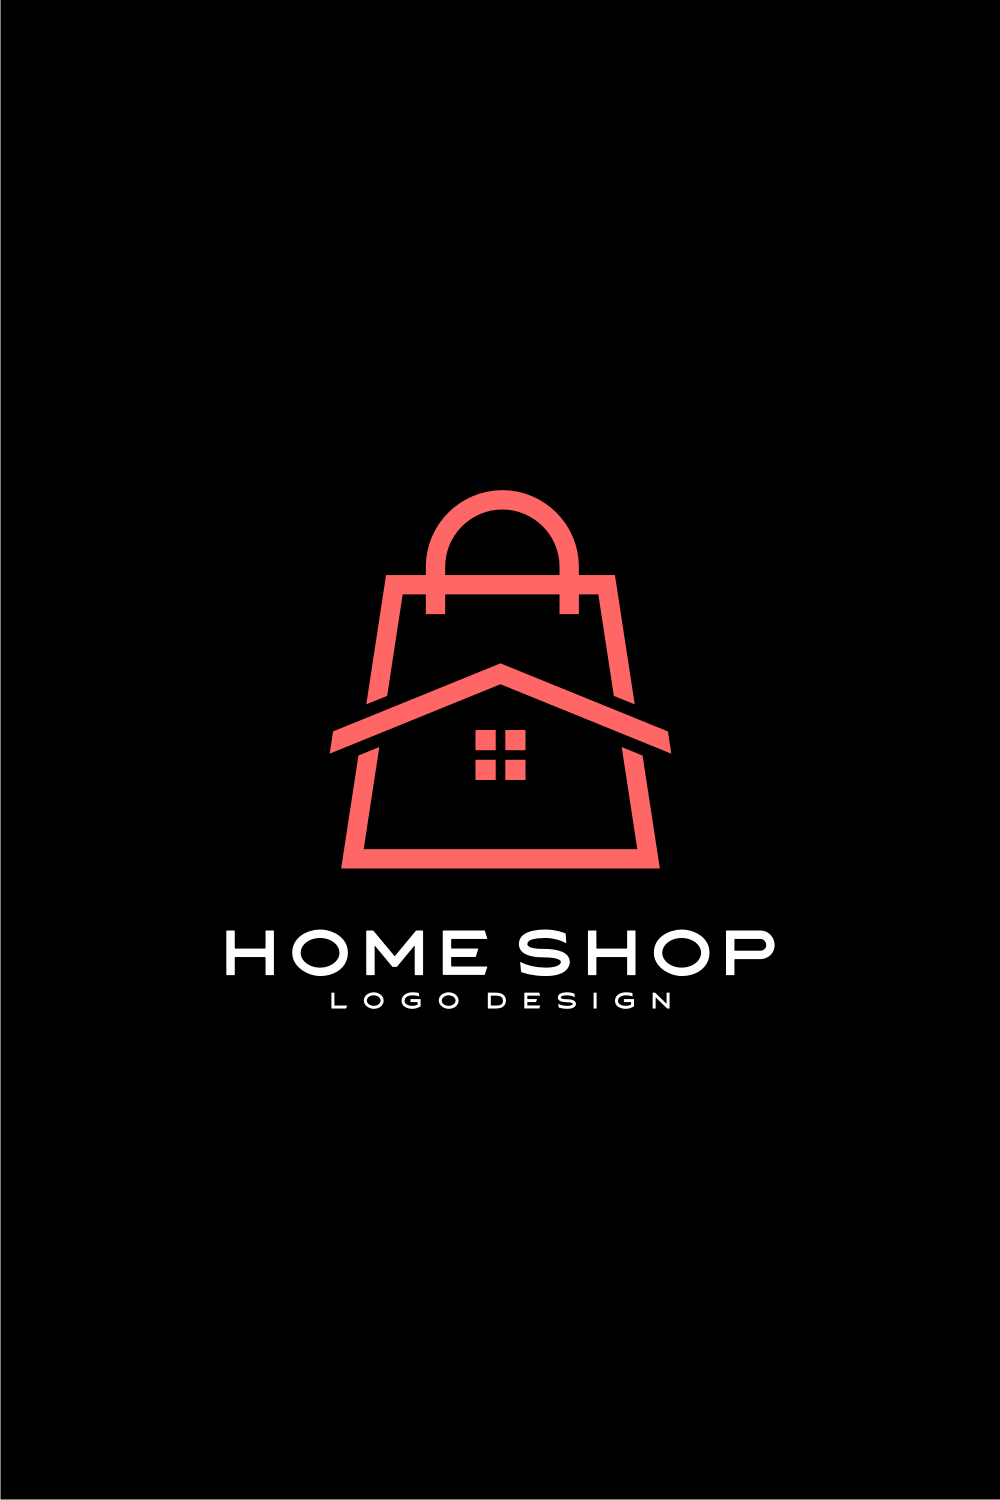 Home Shop Logo Vector Design pinterest image.